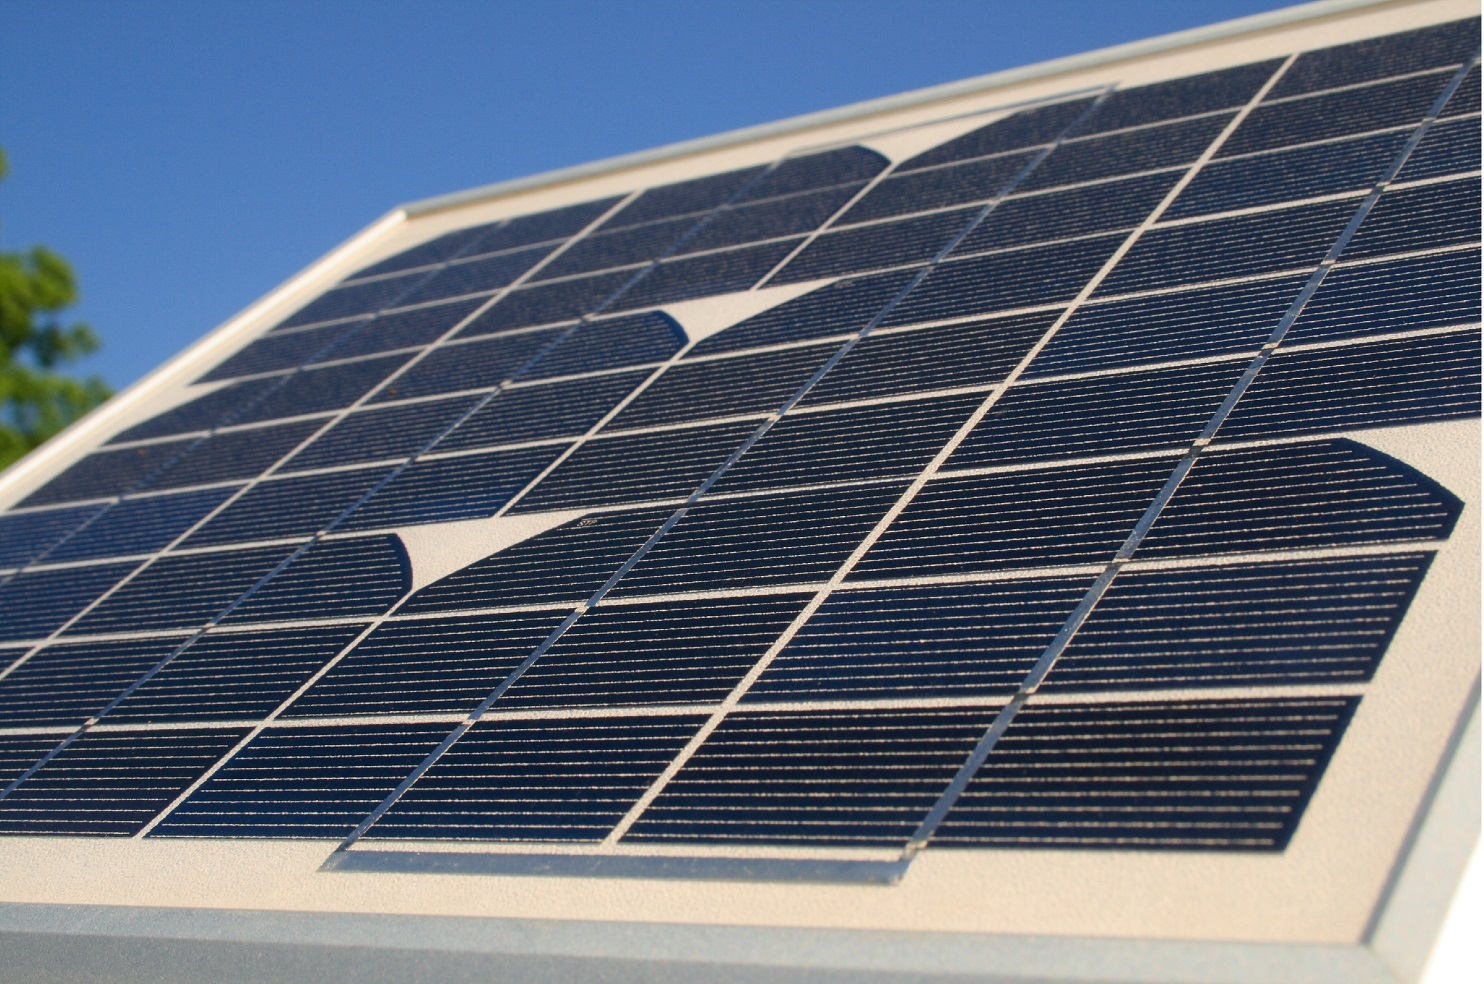 Solar panels are the new future, claim IIFA solar power.